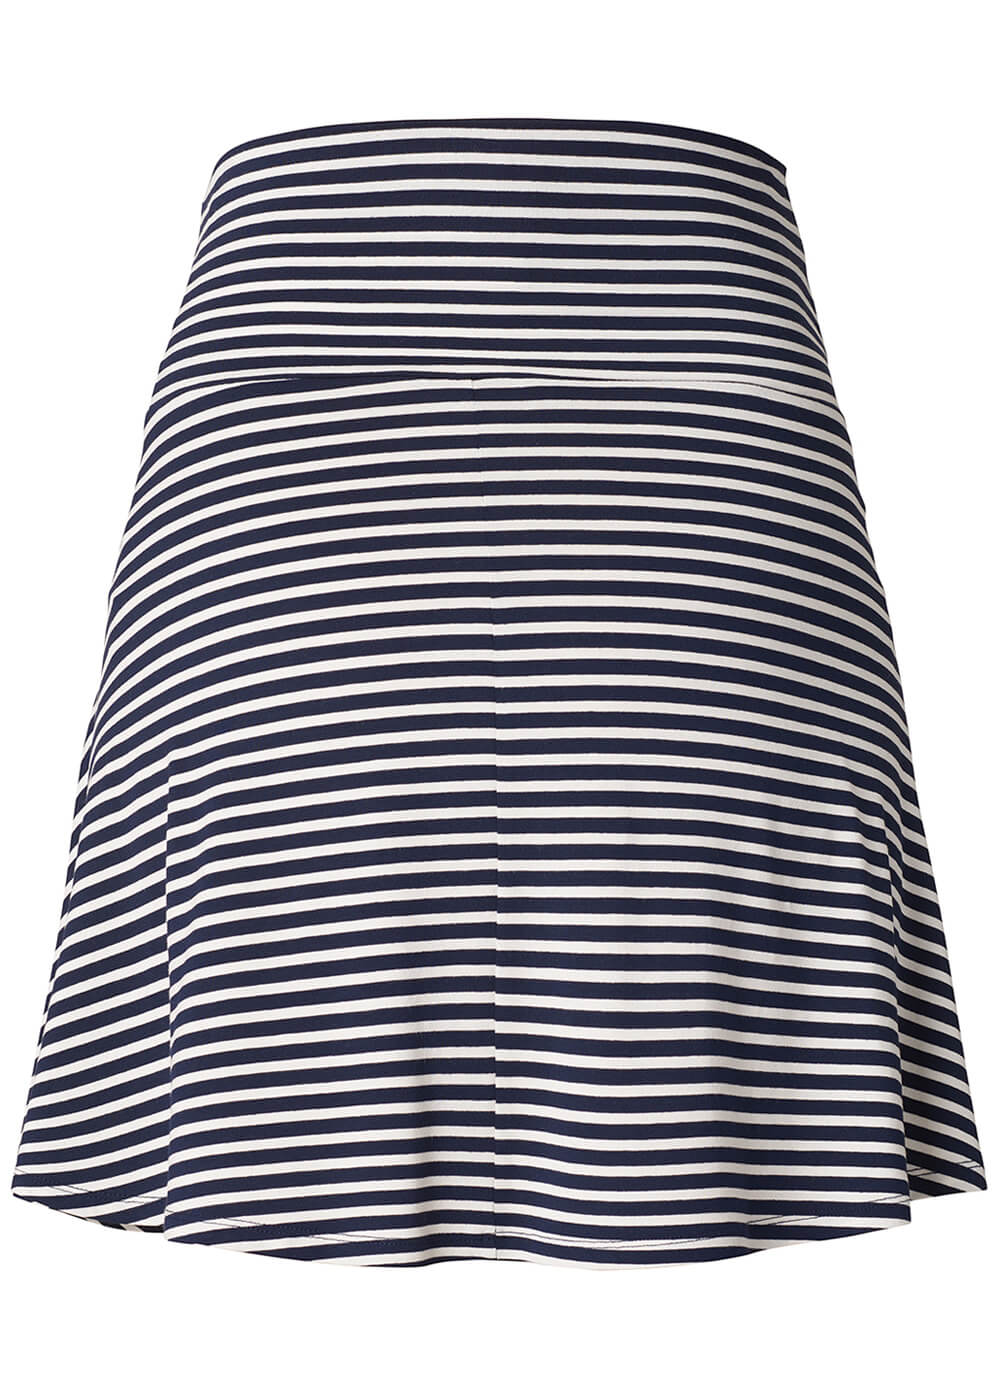 Swirling Navy Striped Jersey Maternity Skirt by Esprit